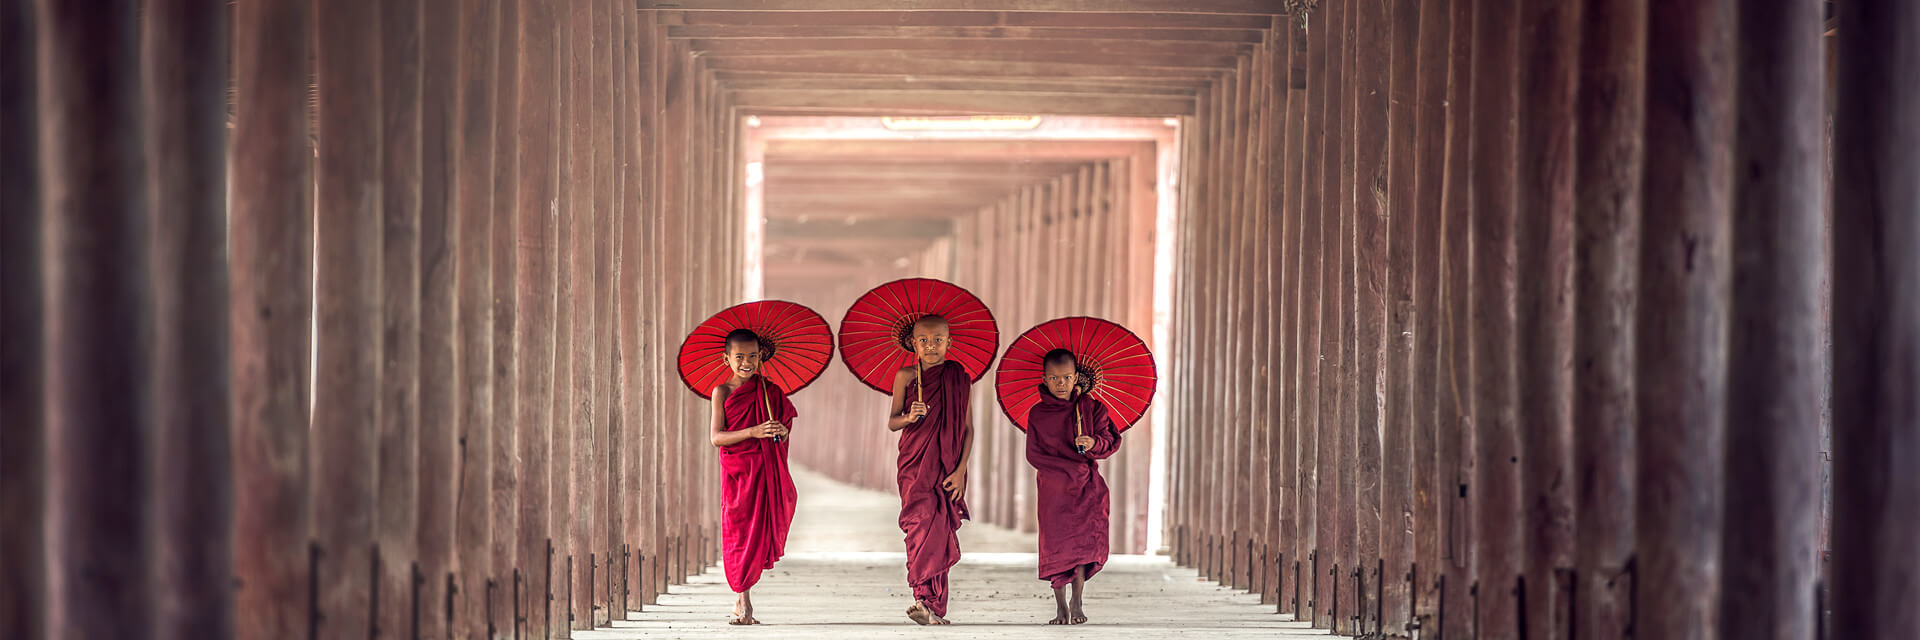 Myanmar-Monks